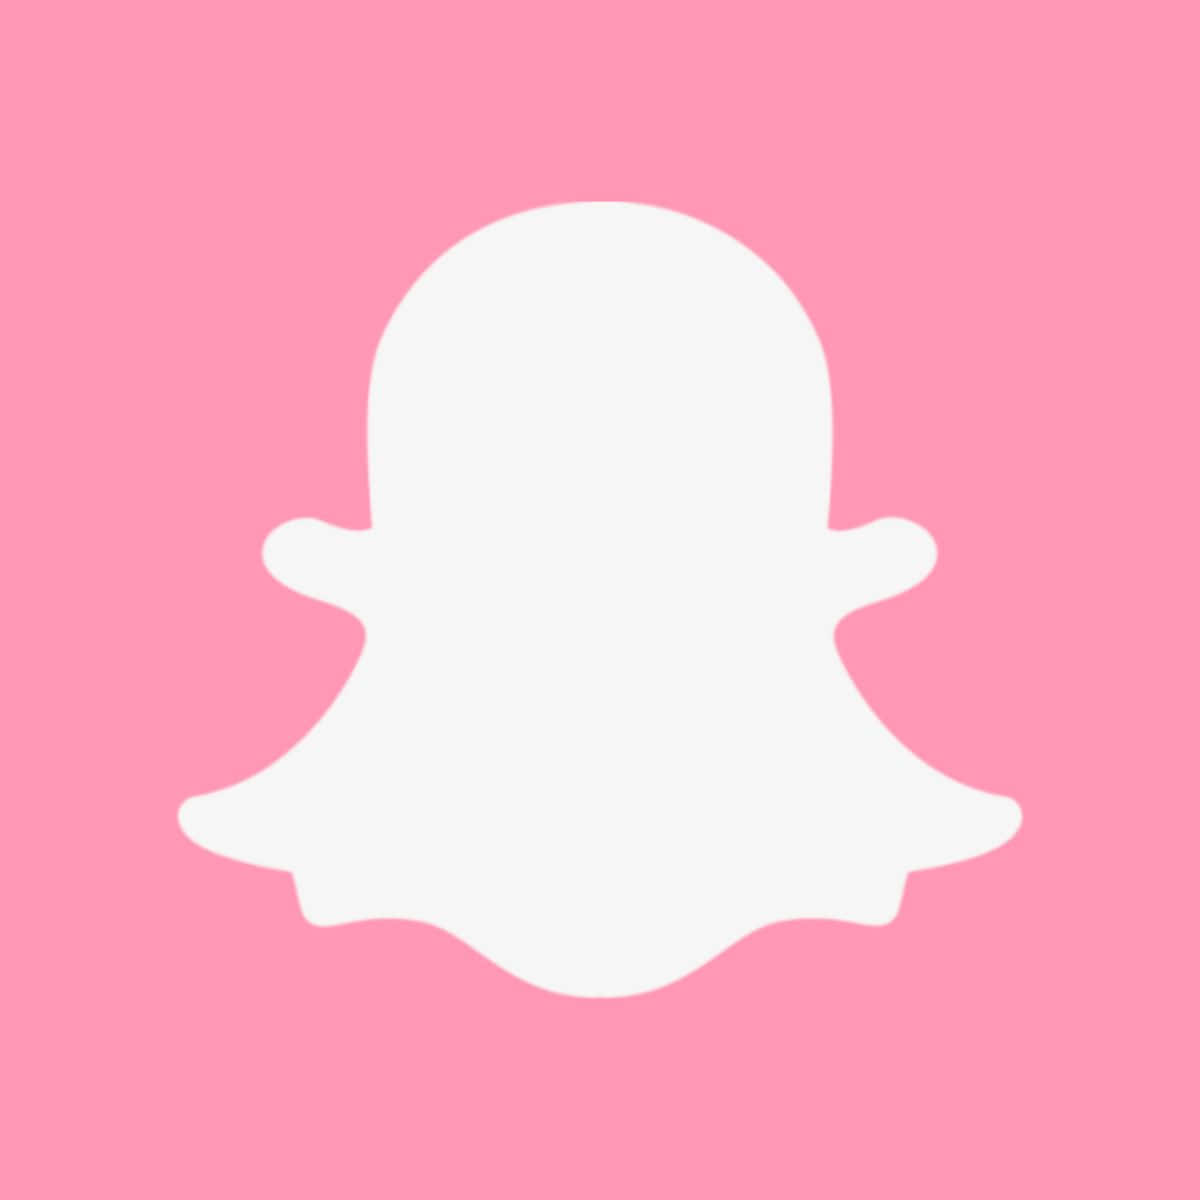 Snapchat Logo On A Pink Background